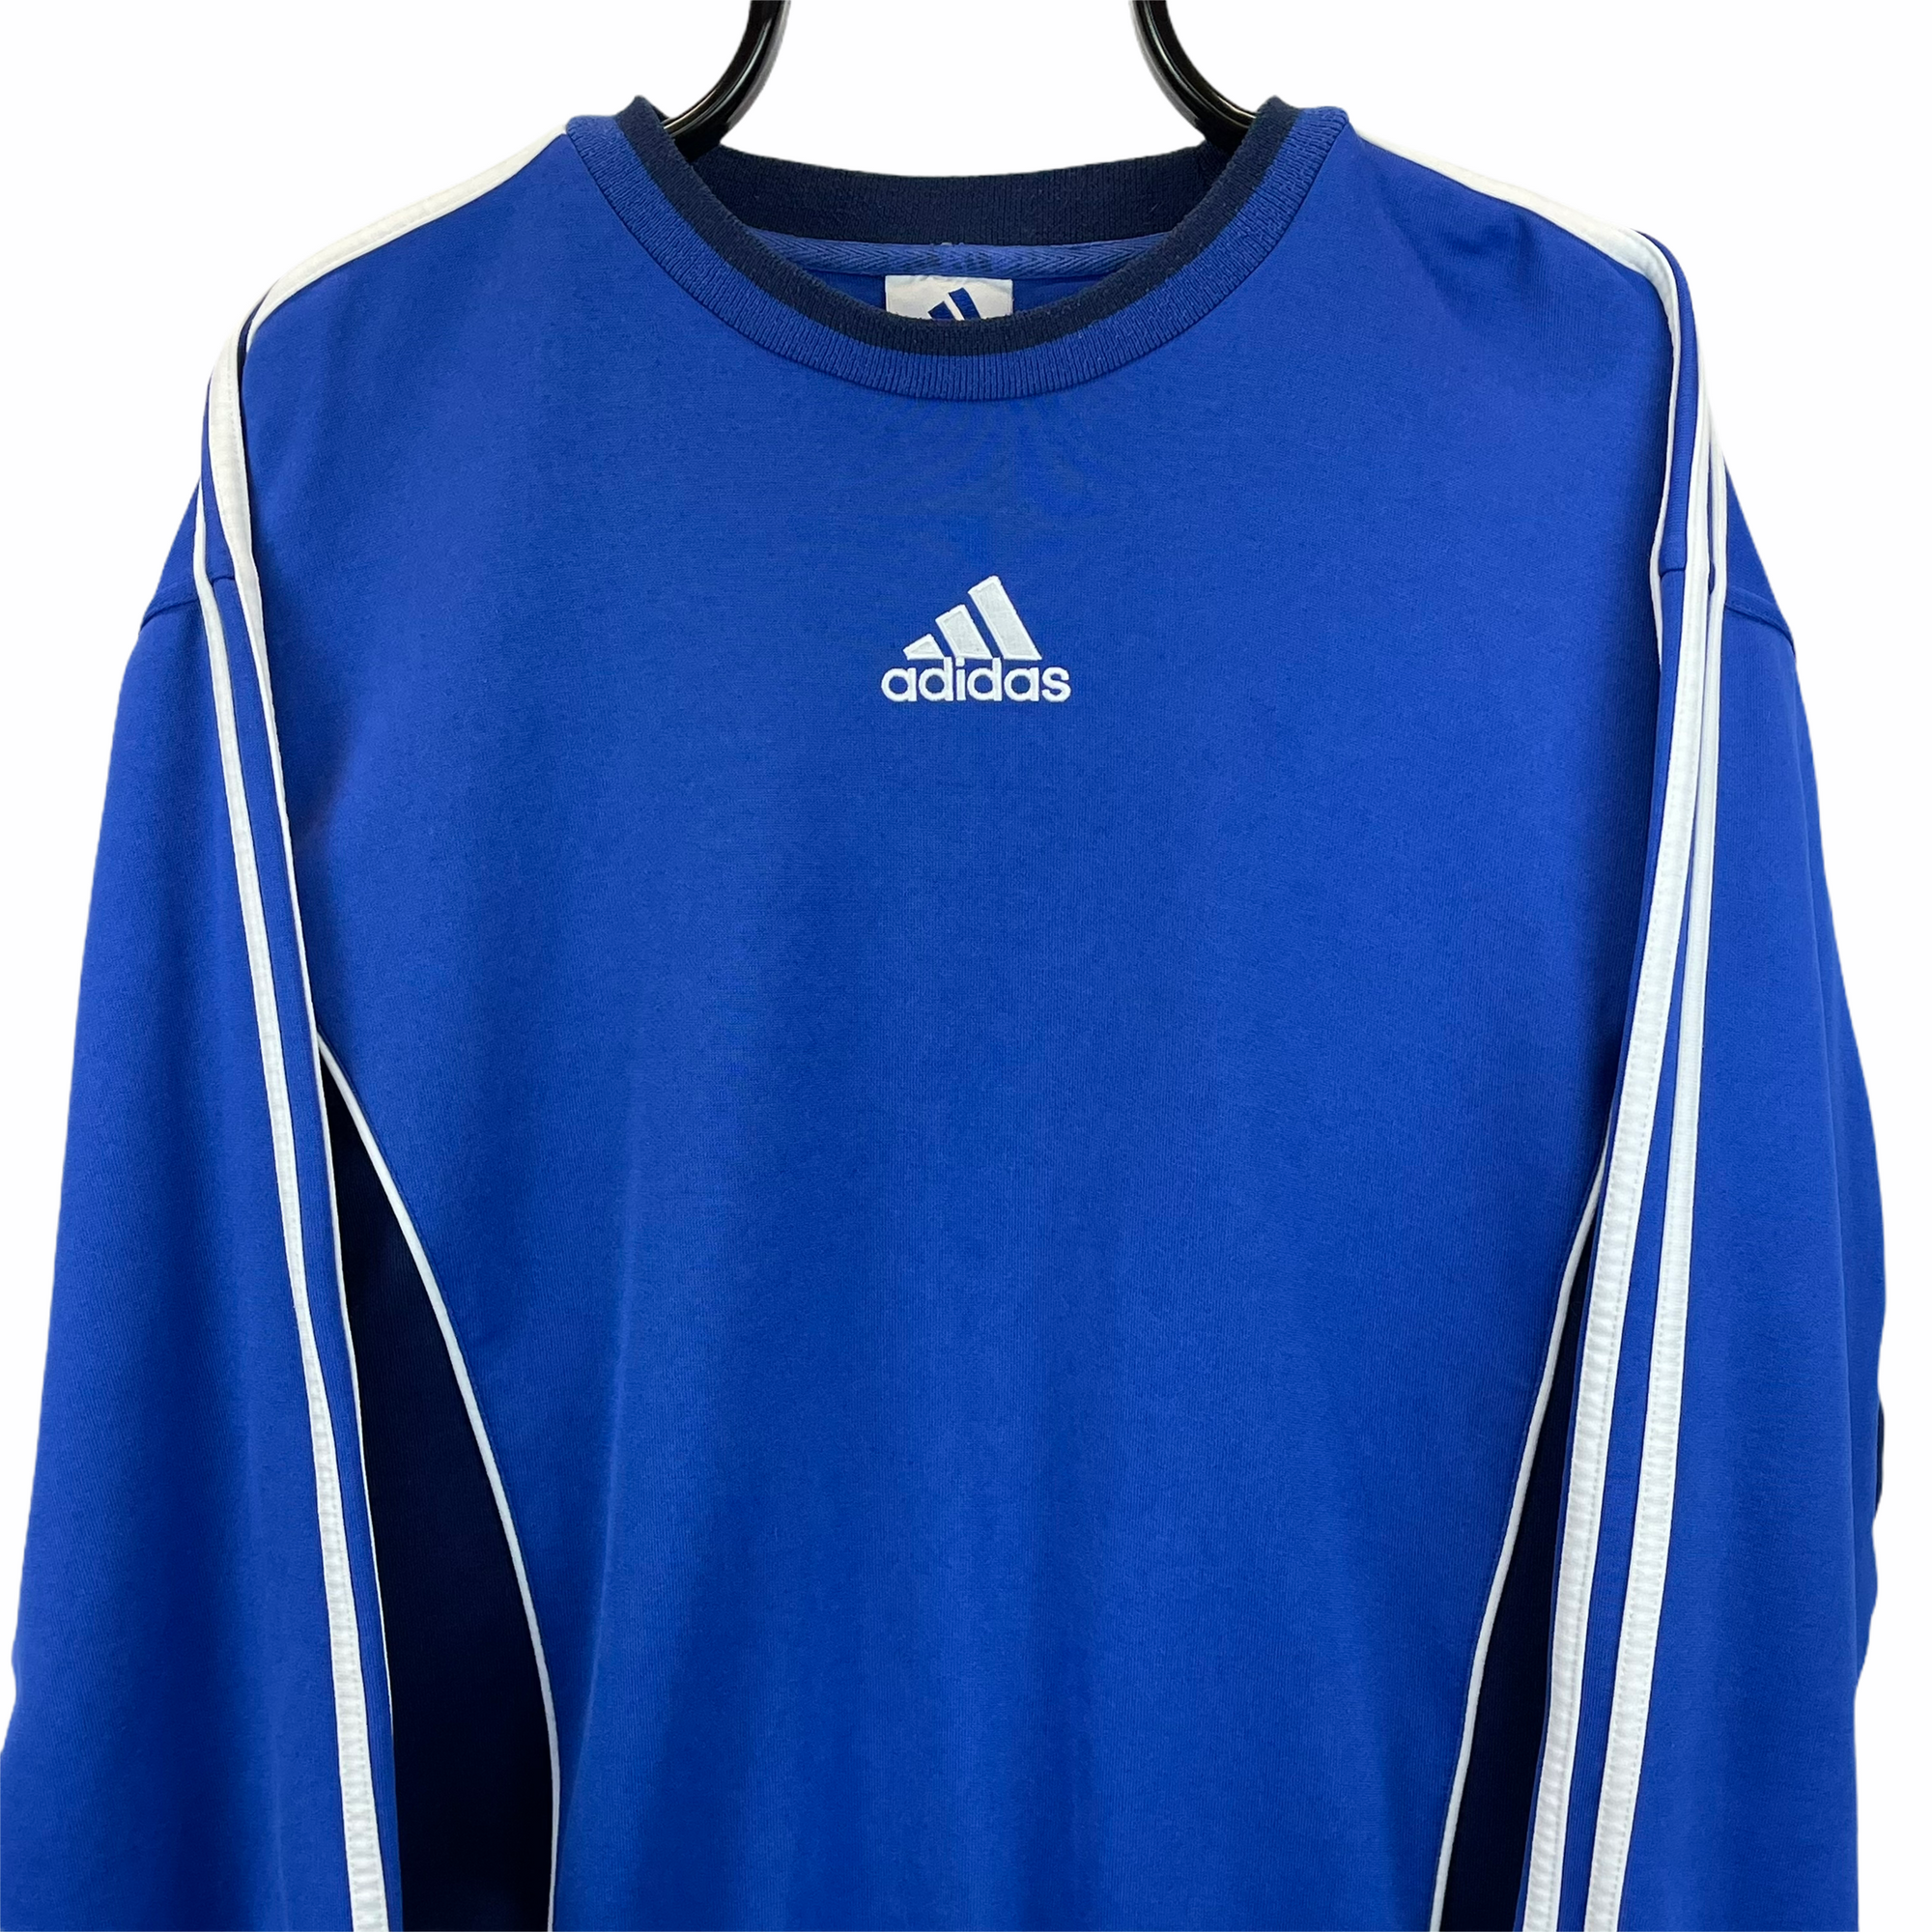 Vintage 90s Adidas Embroidered Centre Logo Sweatshirt - Men's Large/Women's XL